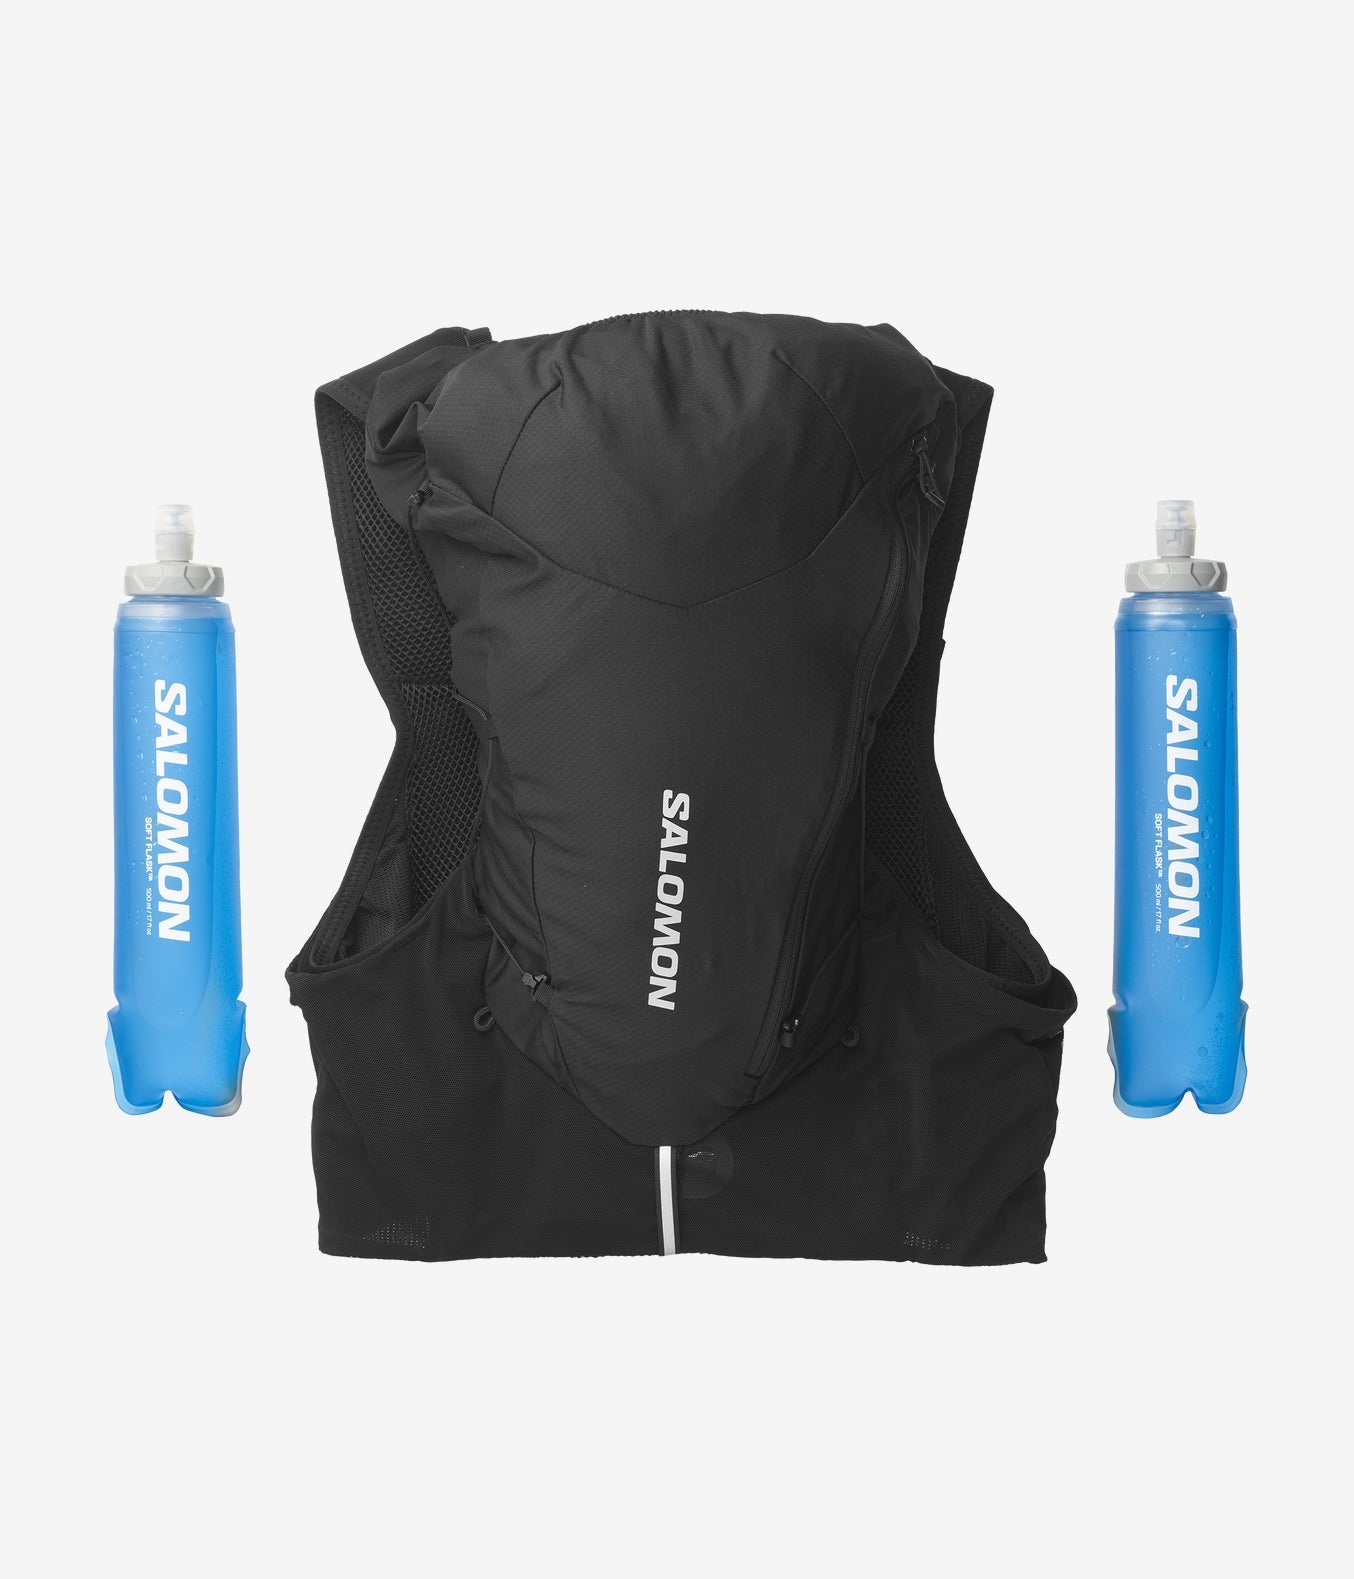 Salomon Unisex ADV Skin 12 Hydration Pack with Flask, Black/Ebony